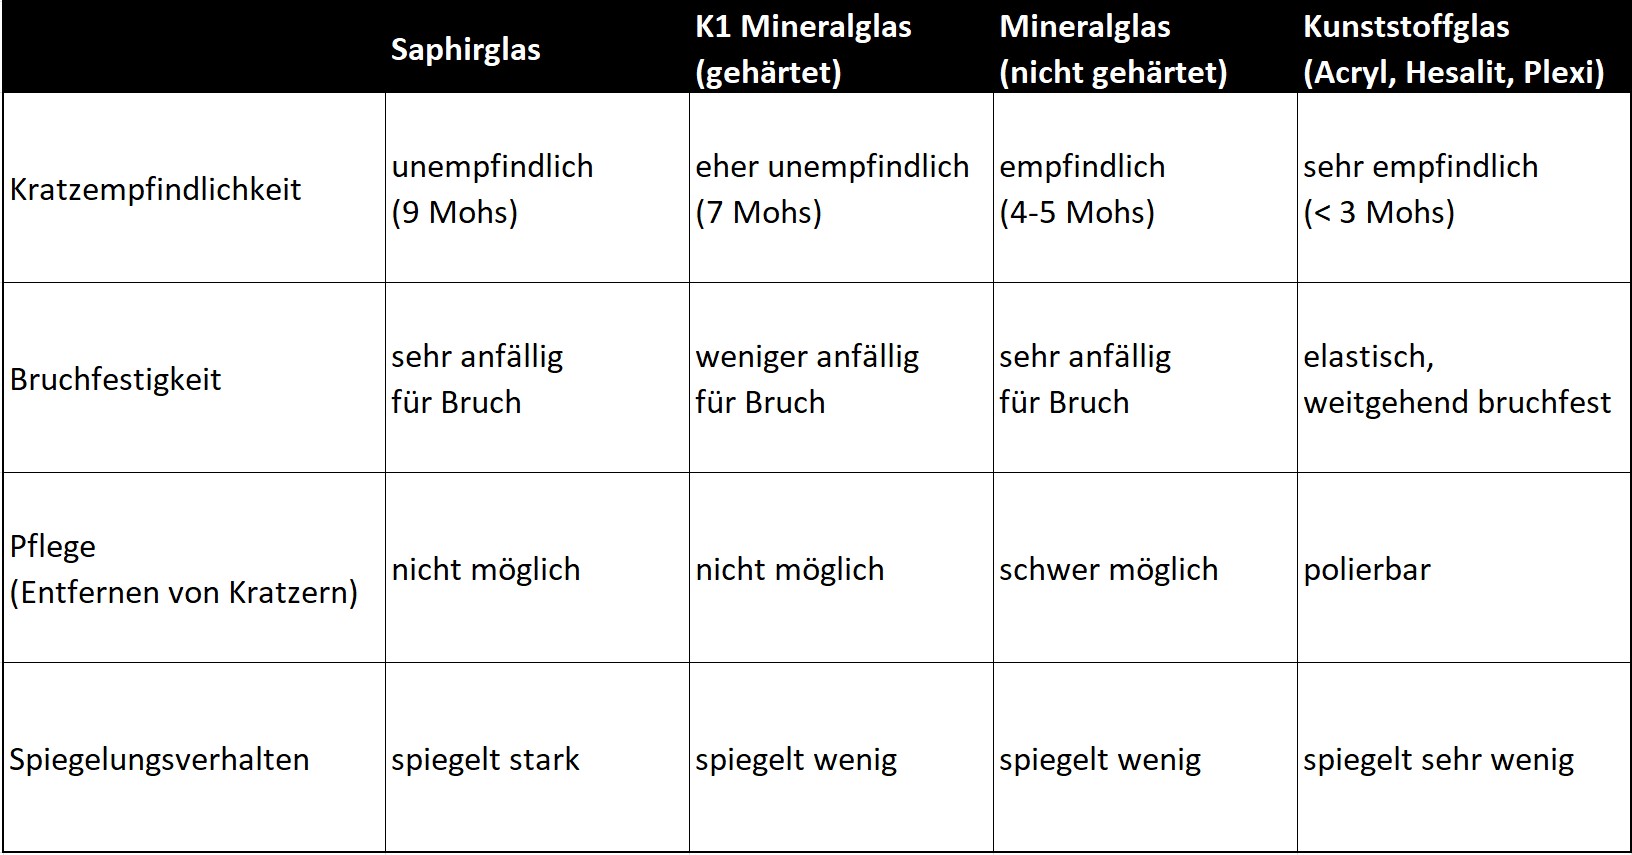 Saphirglas vs. K1 Mineralglas vs. Kunststoffglas Uebersicht